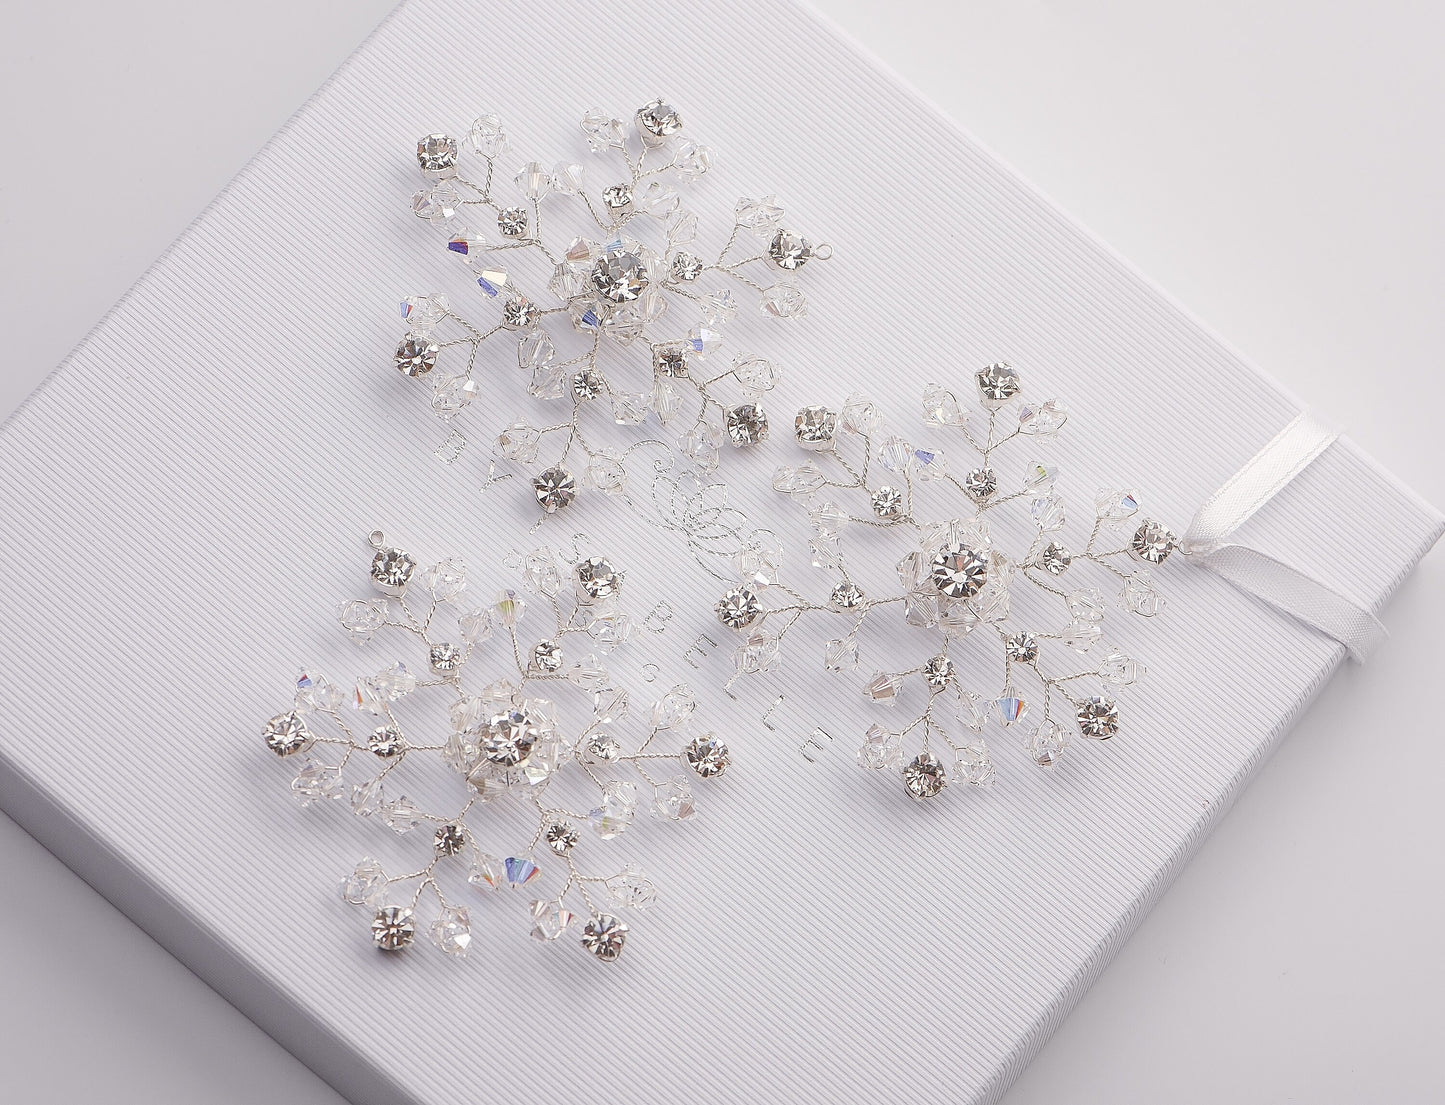 Snowflake - crystal ornament